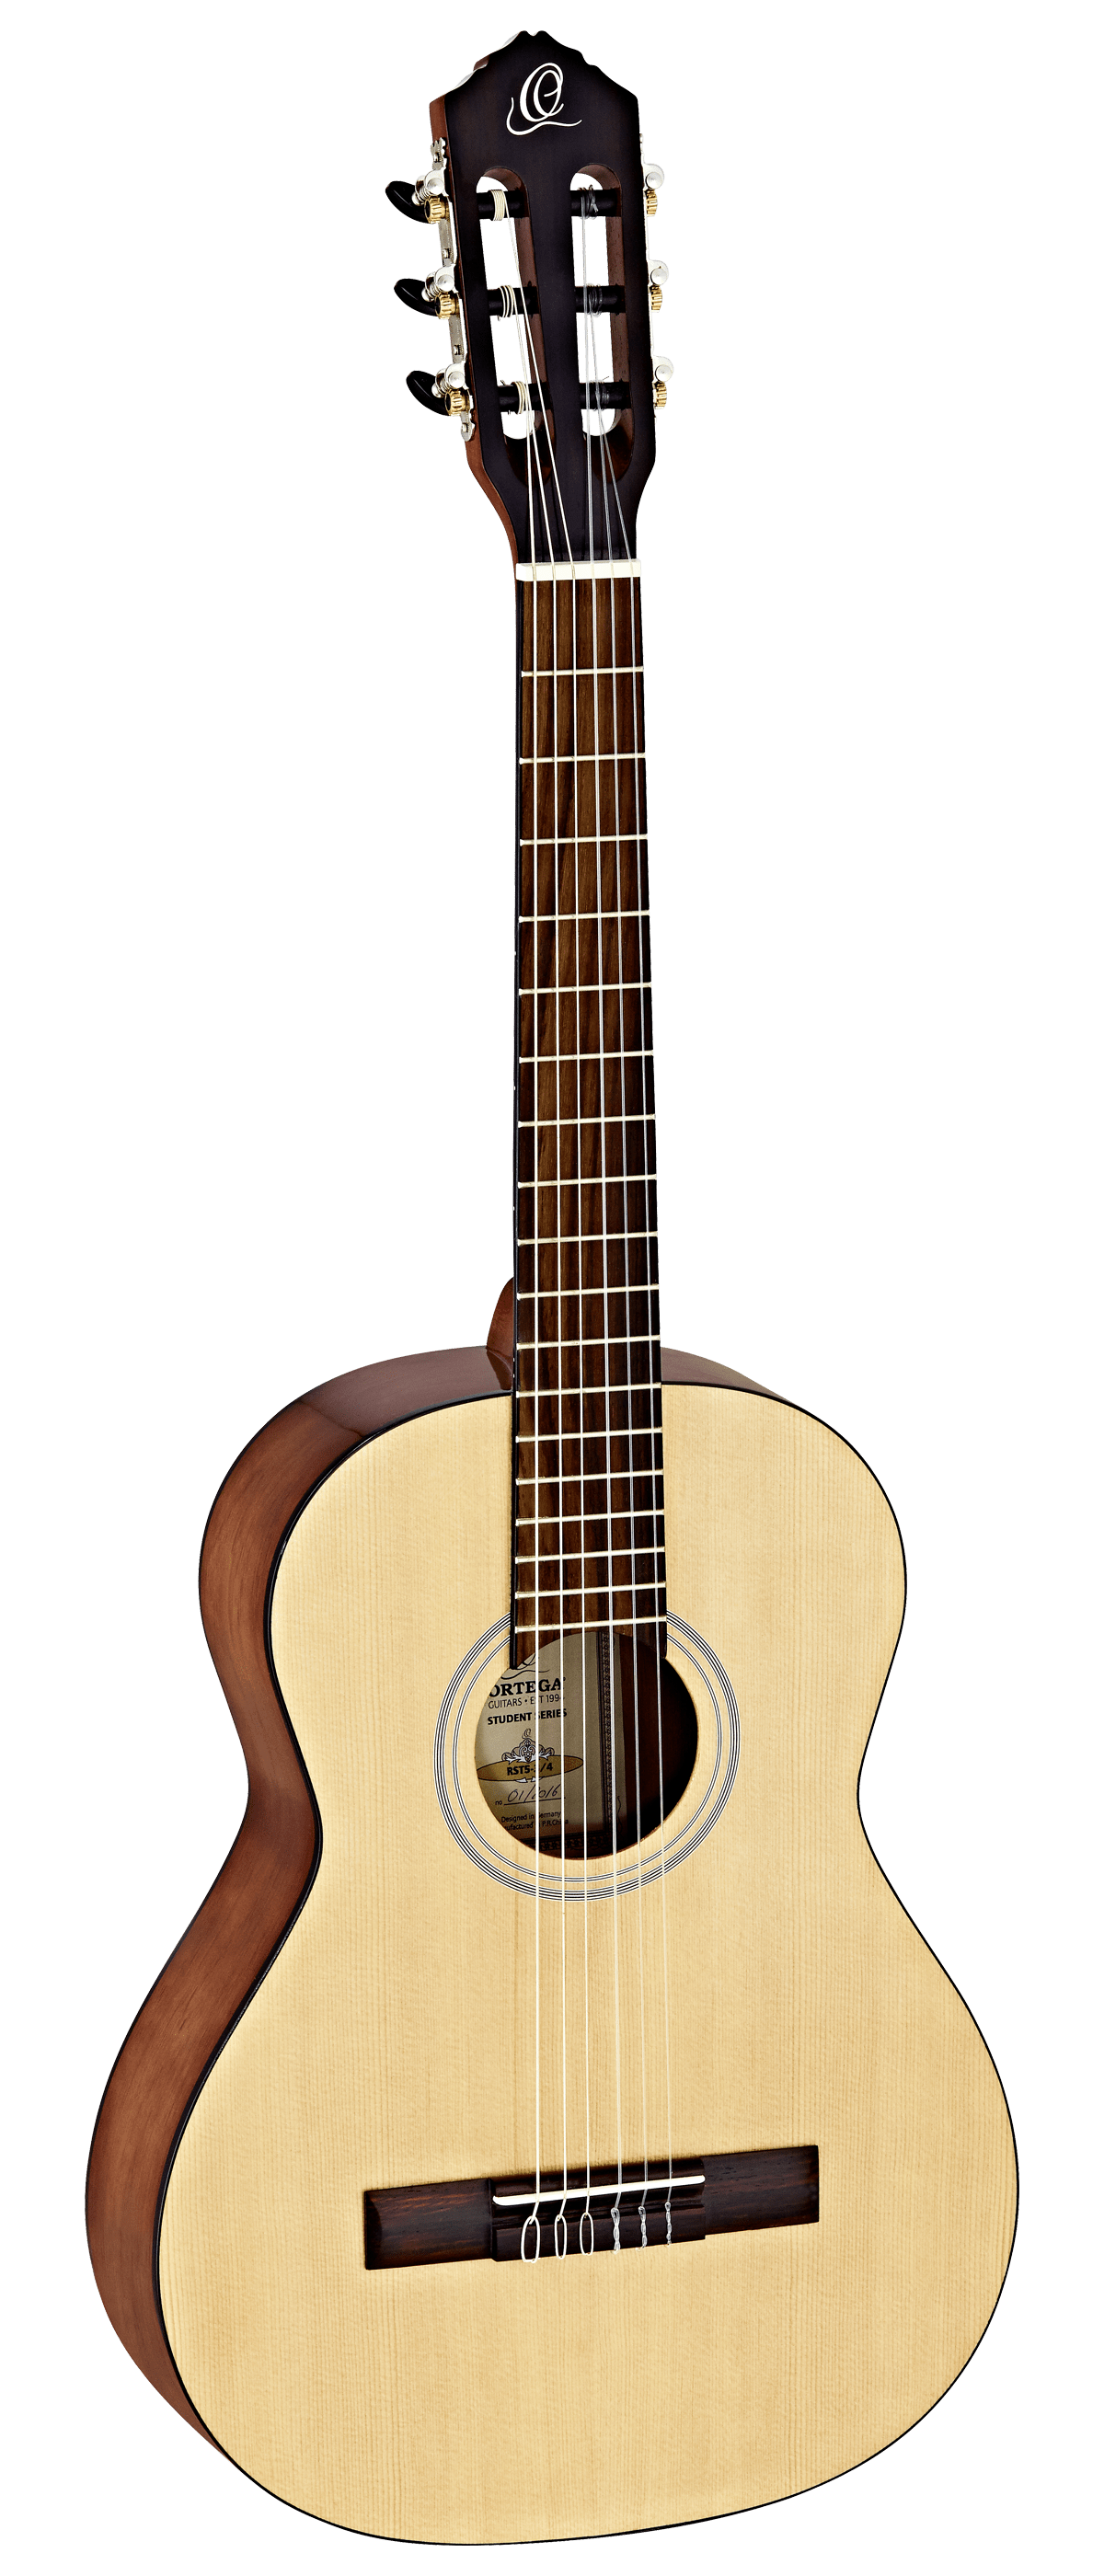 Ortega Student Series 3/4 Size Acoustic Guitar